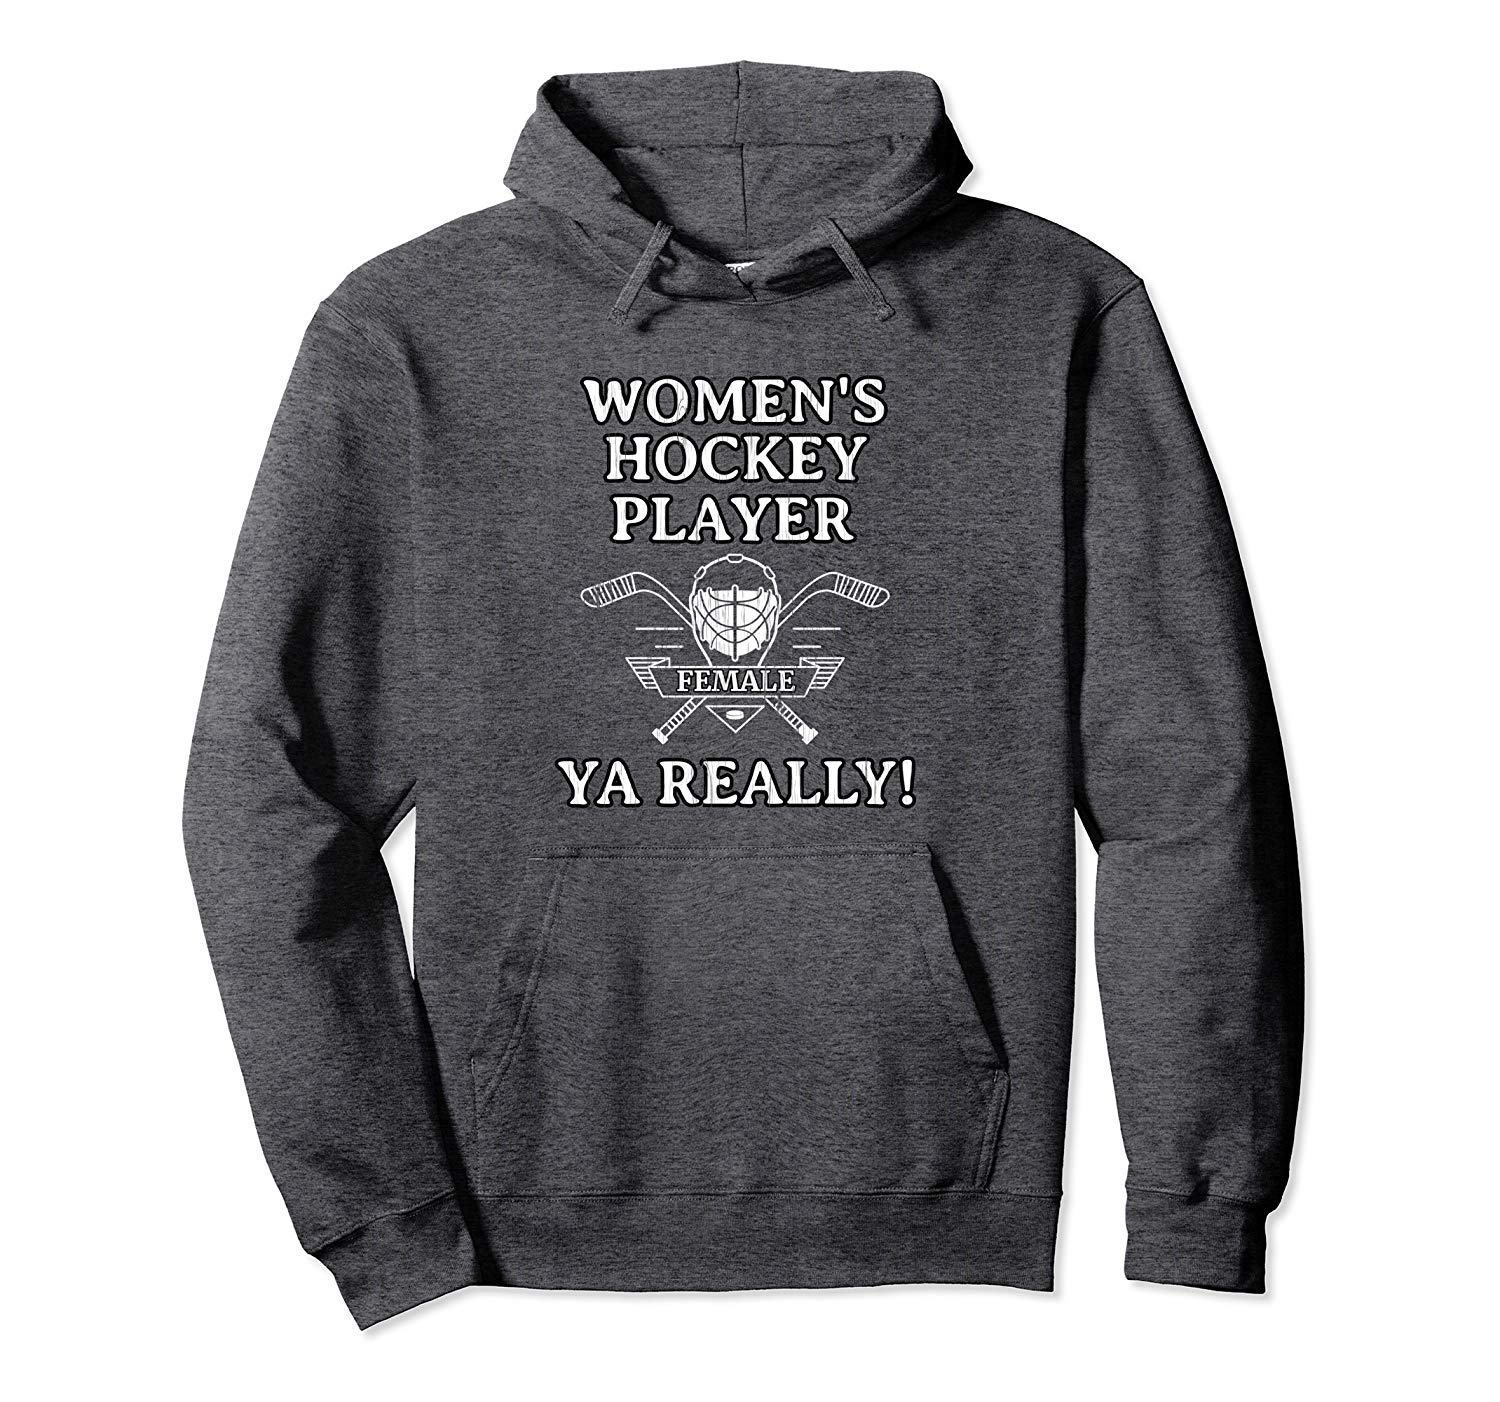 WOMENS HOCKEY PLAYER – YA REALLY! Funny Ice Hockey hoodie